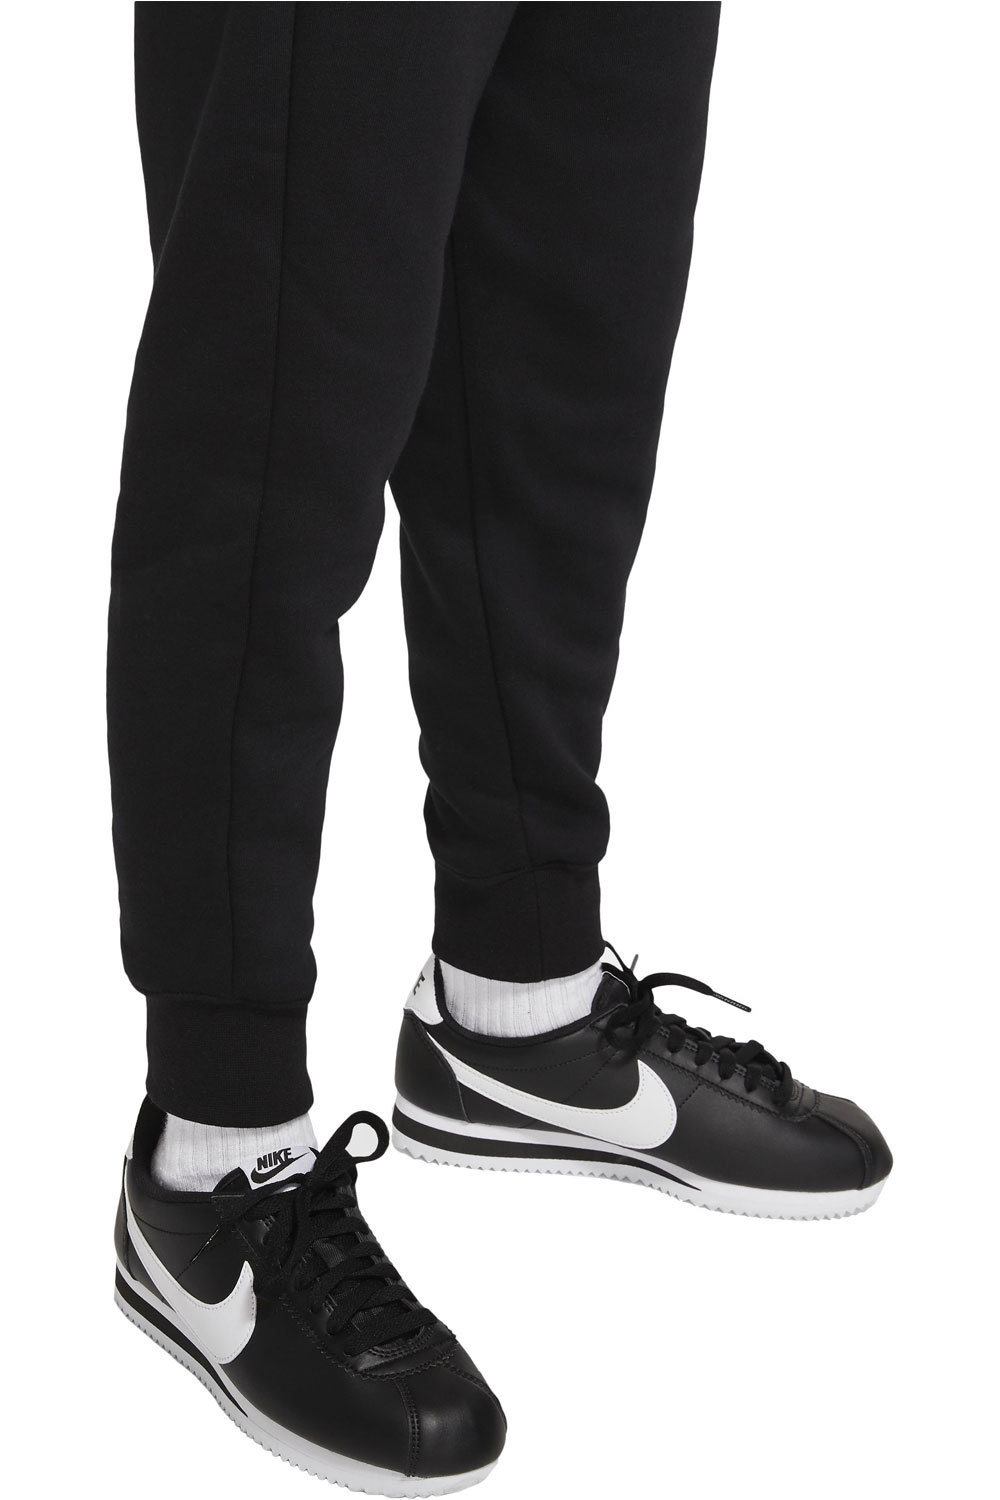 Nike pantalón niña (senior) G NSW PE PANT vista detalle